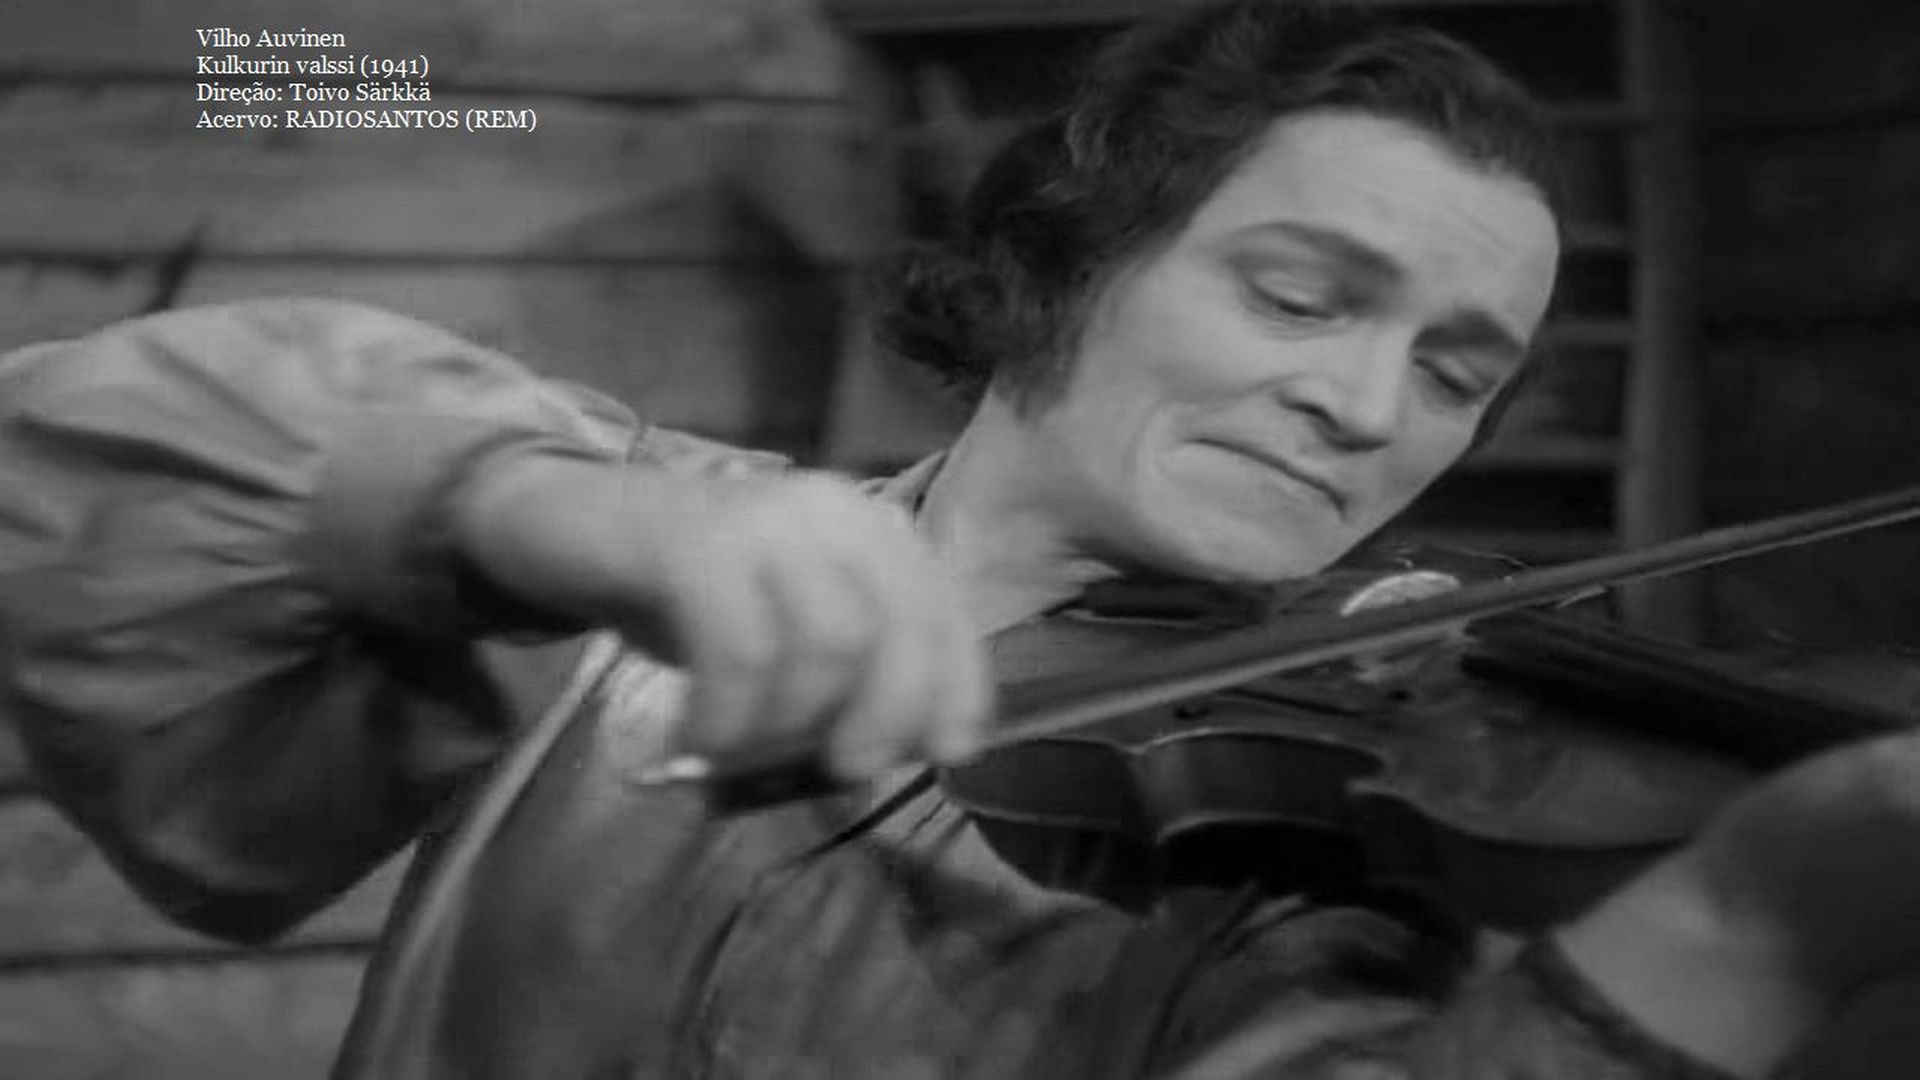 Kulkurin valssi (1941) Screenshot 3 